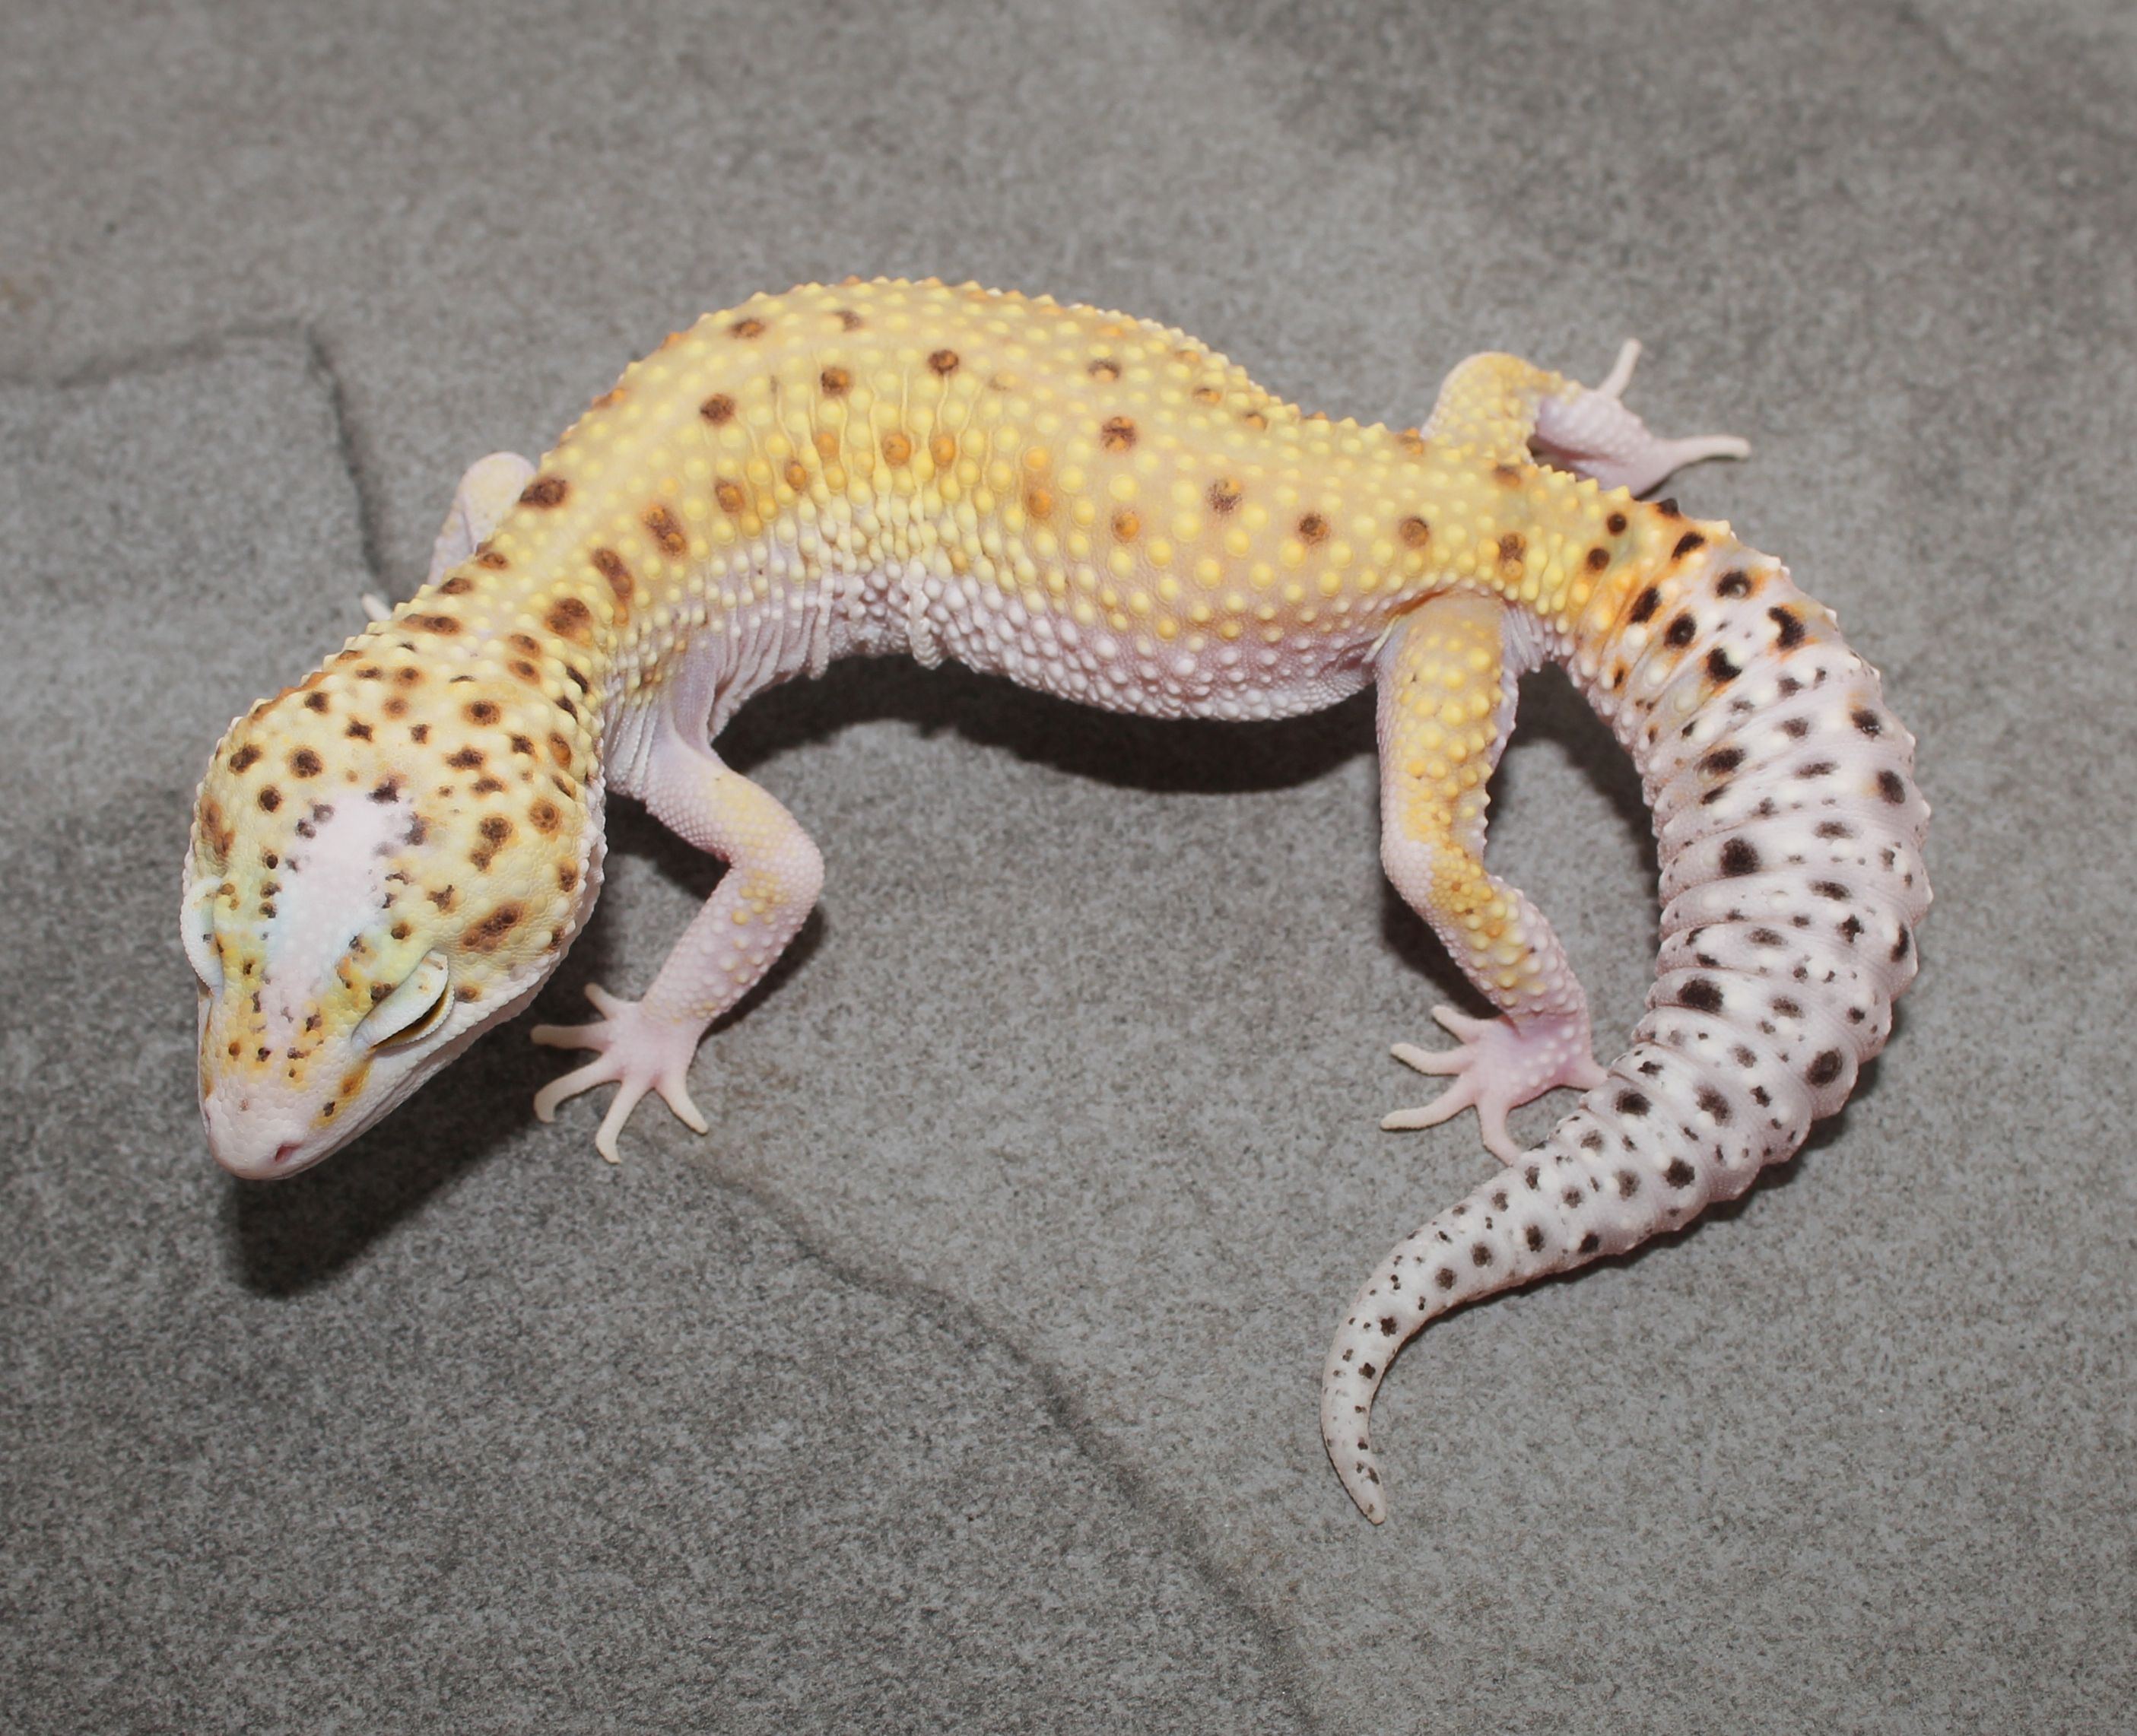 Eclipse Leopard Gecko by Impeccable Gecko